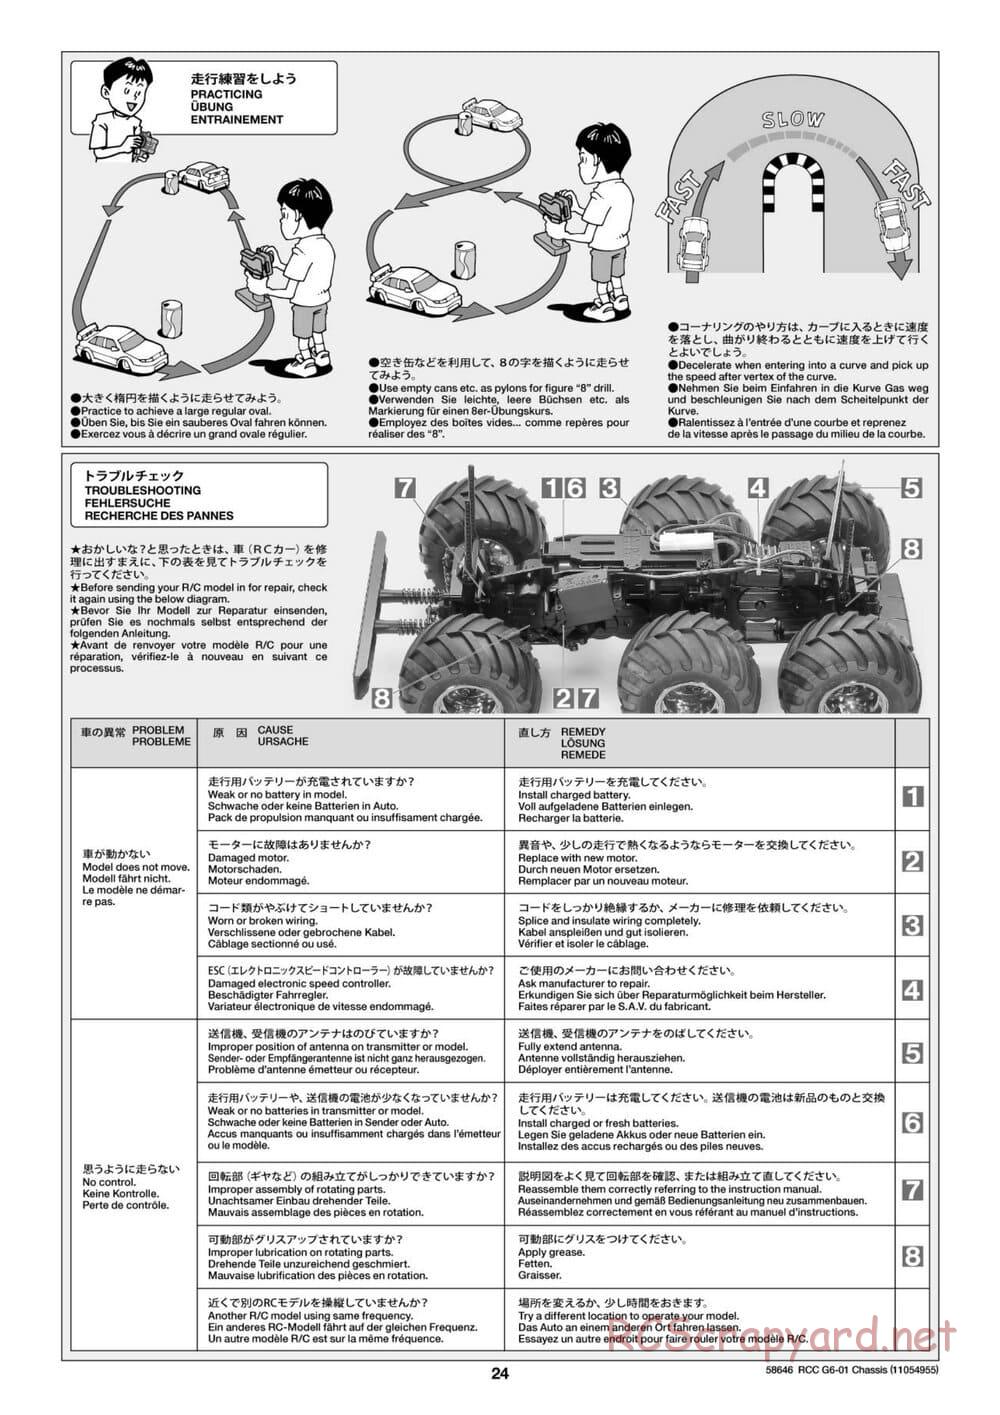 Tamiya - Konghead 6x6 - G6-01 Chassis - Manual - Page 24